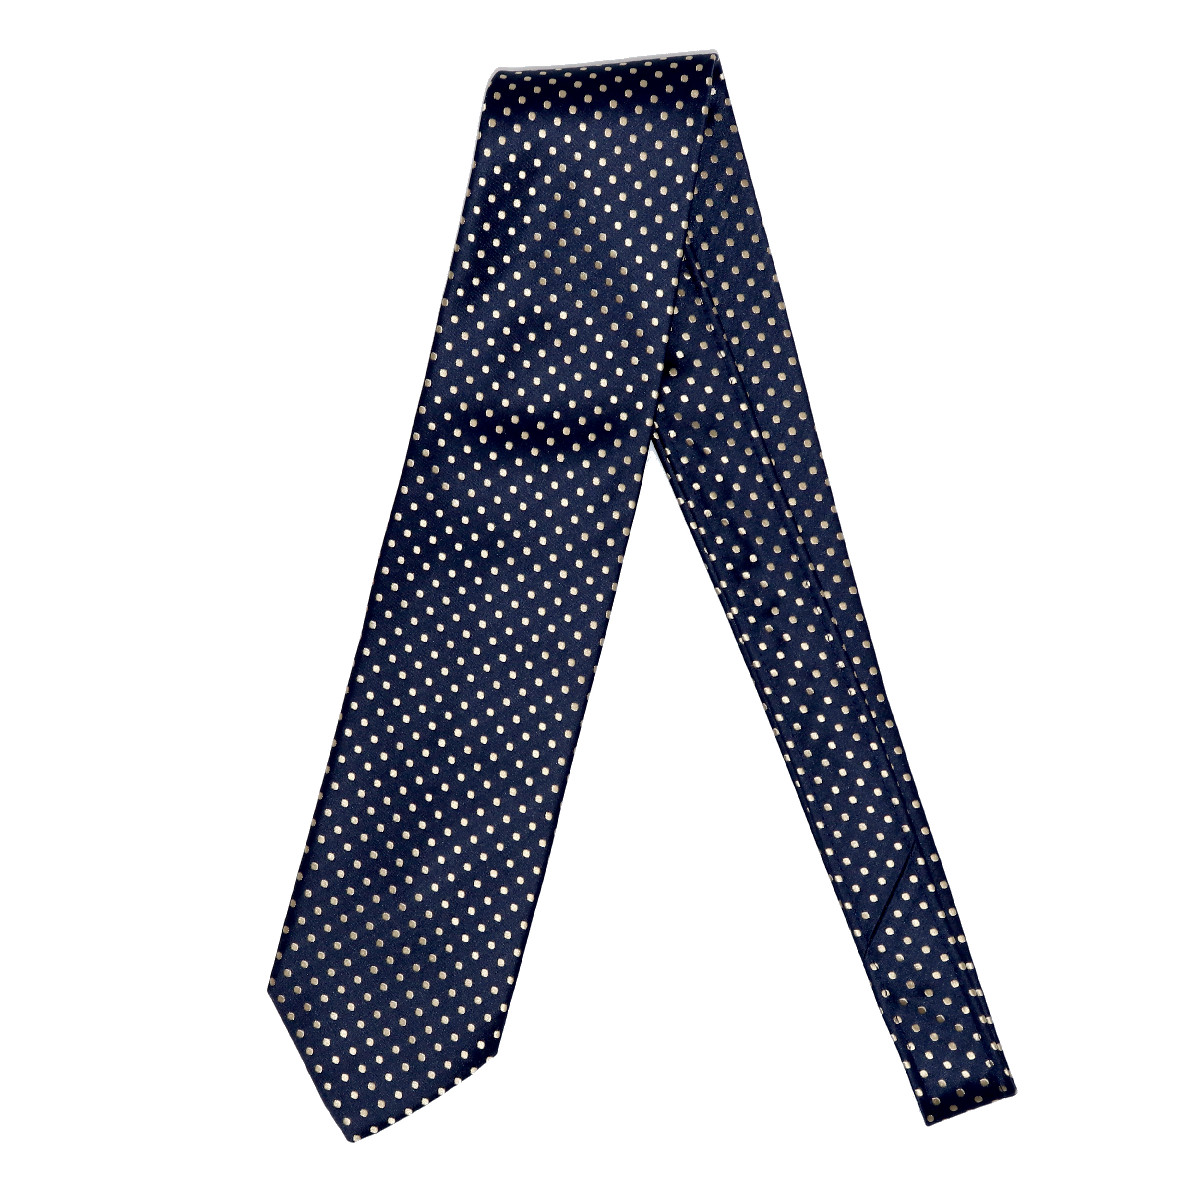 Refined business tie, 100% silk, ivory lurex dots on navy blue ...